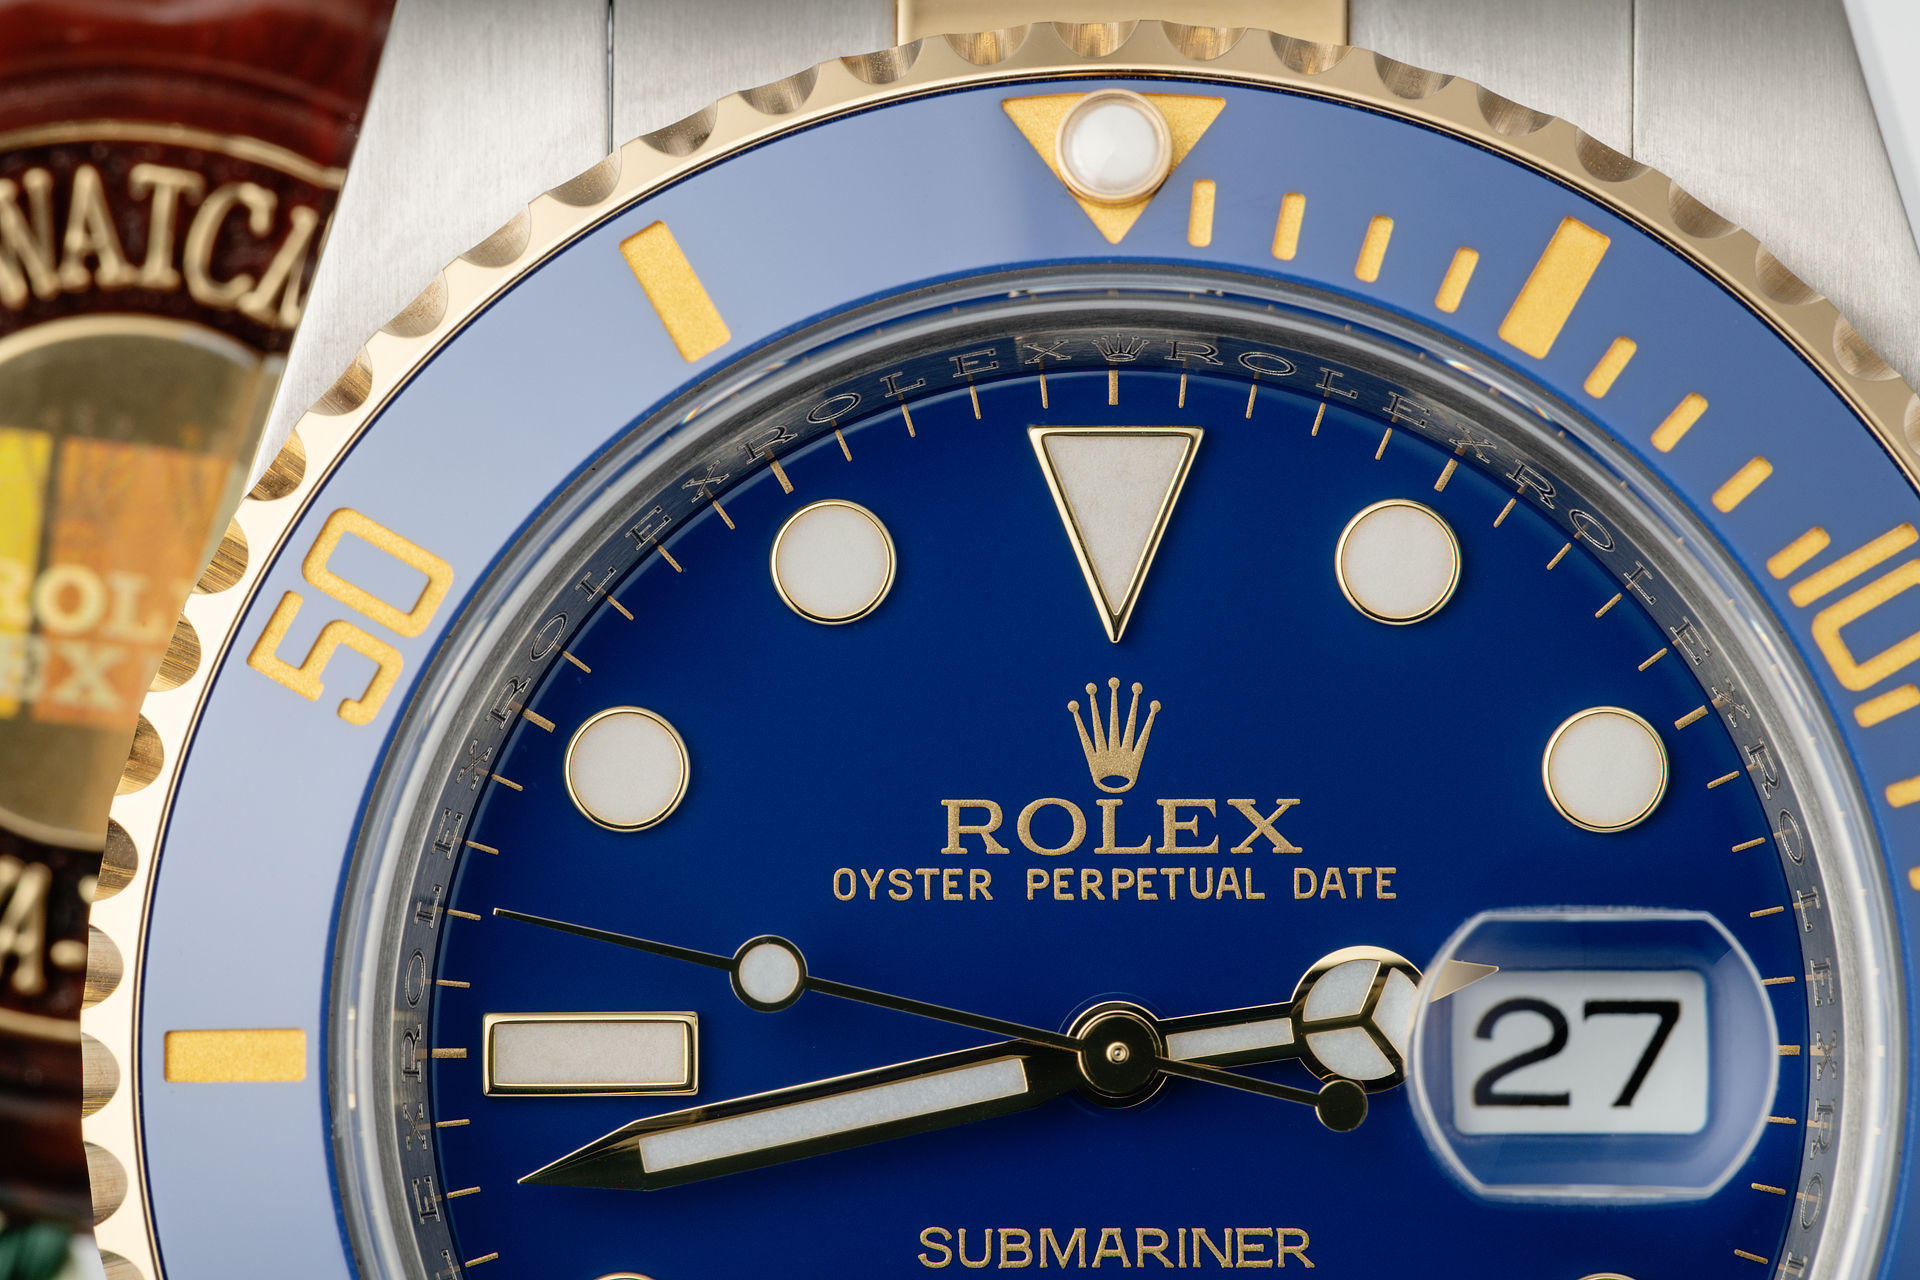 Steel & Gold 'Latest Model' | ref 116613LB | Rolex Submariner Date